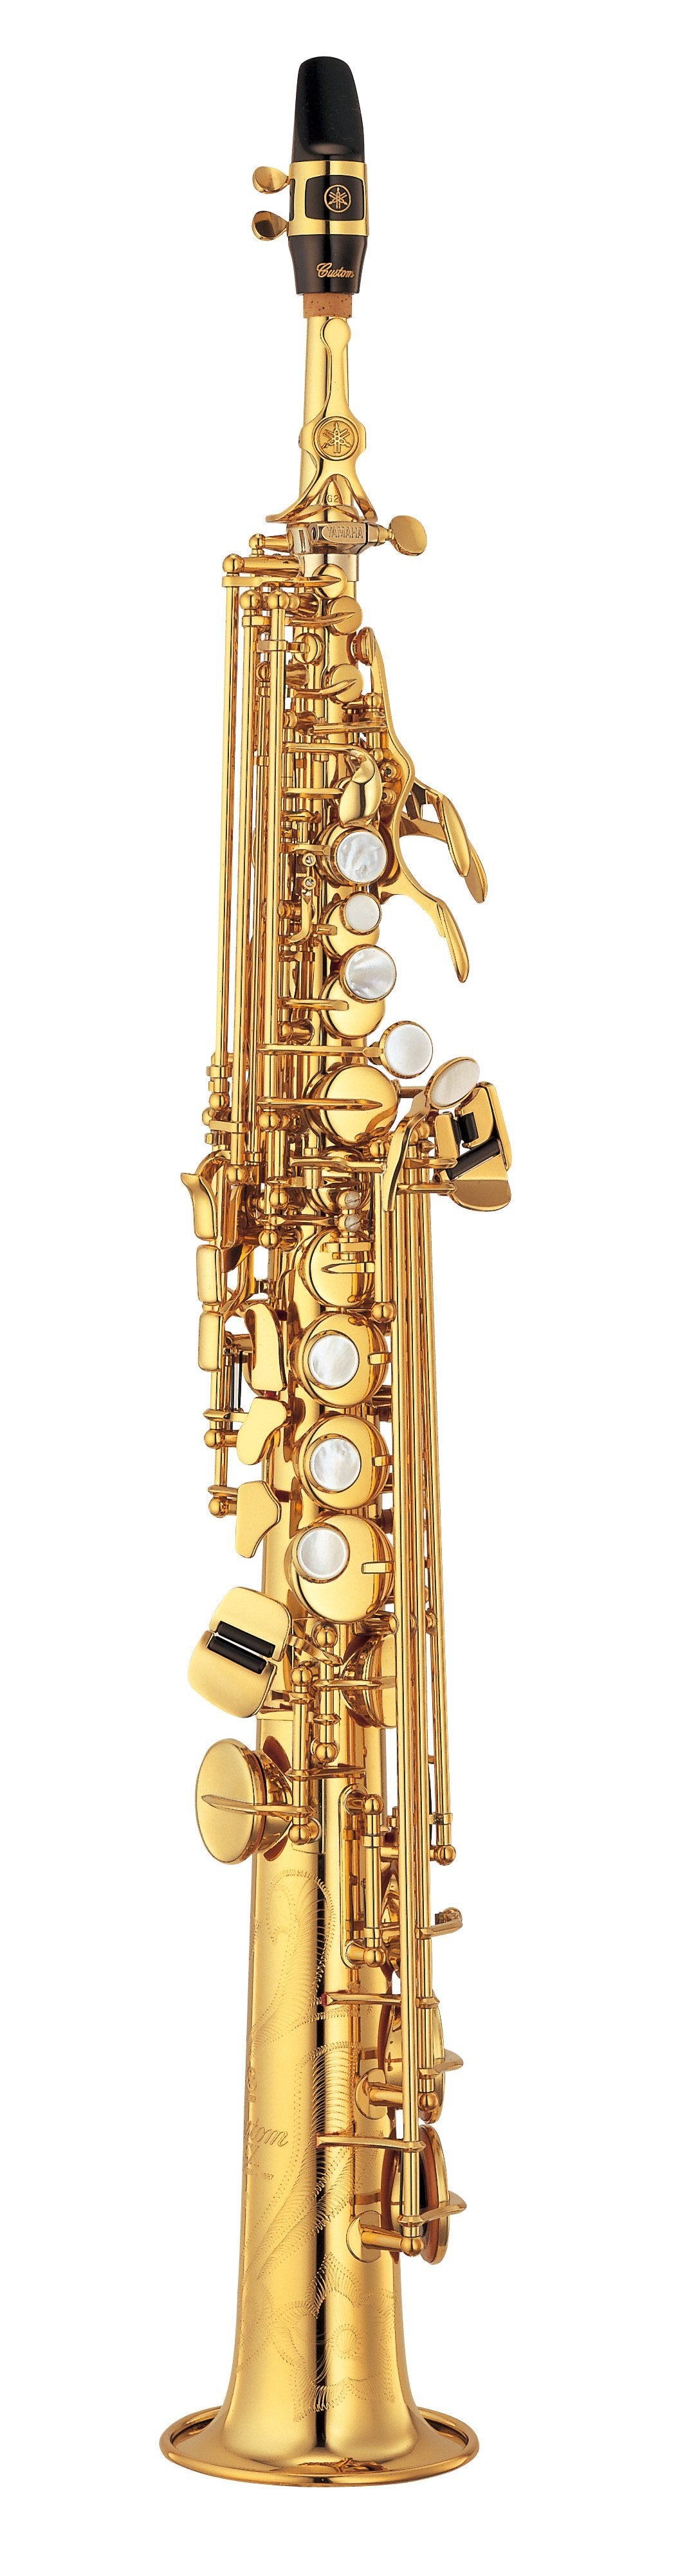 Yamaha YSS875EXHG Custom EX Bb Soprano Saxophone